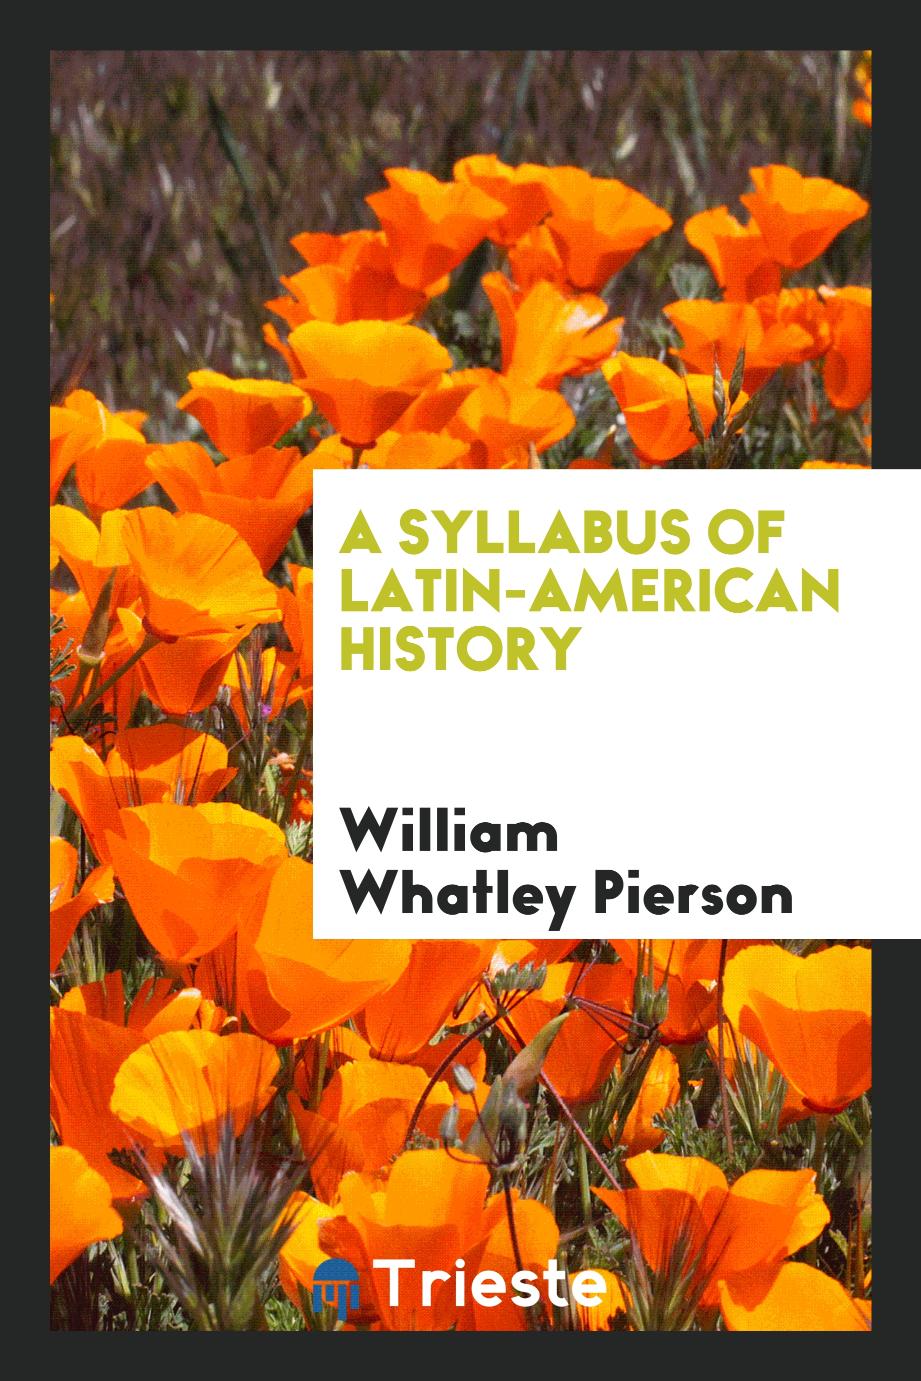 A syllabus of Latin-American history